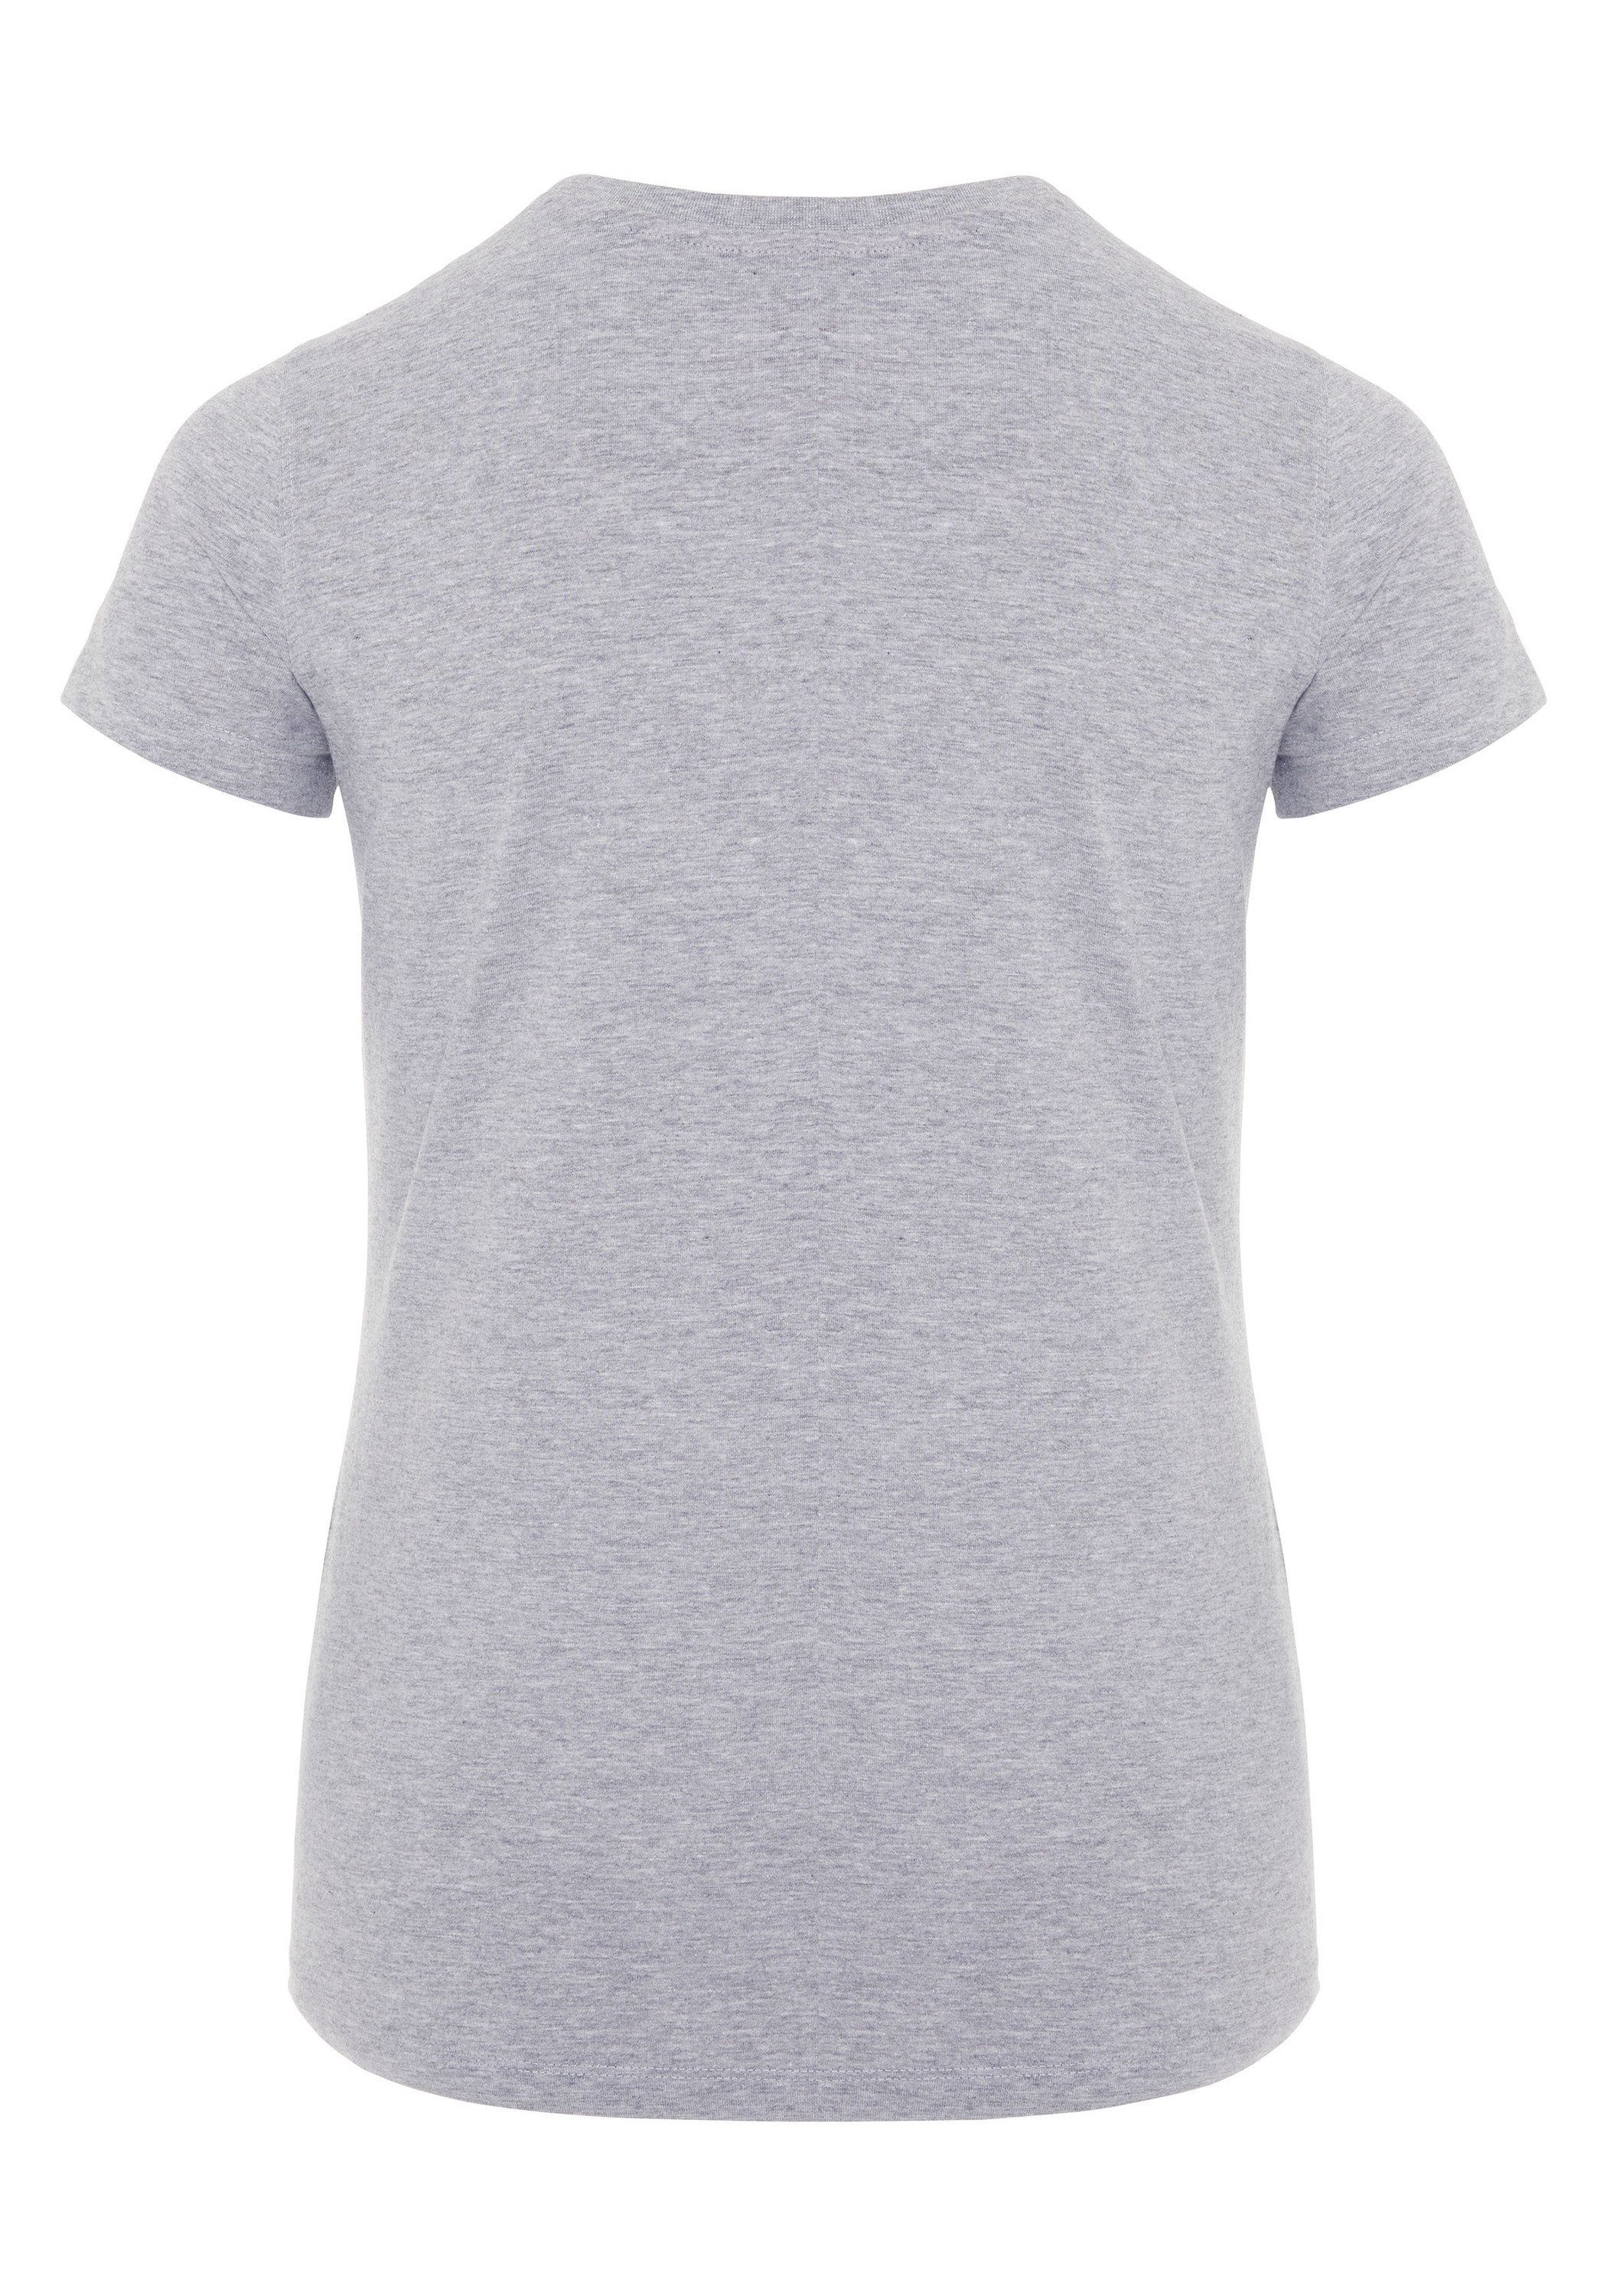 Oklahoma Jeans Neutral mit Gray Print-Shirt Melange 17-4402M Frontprint